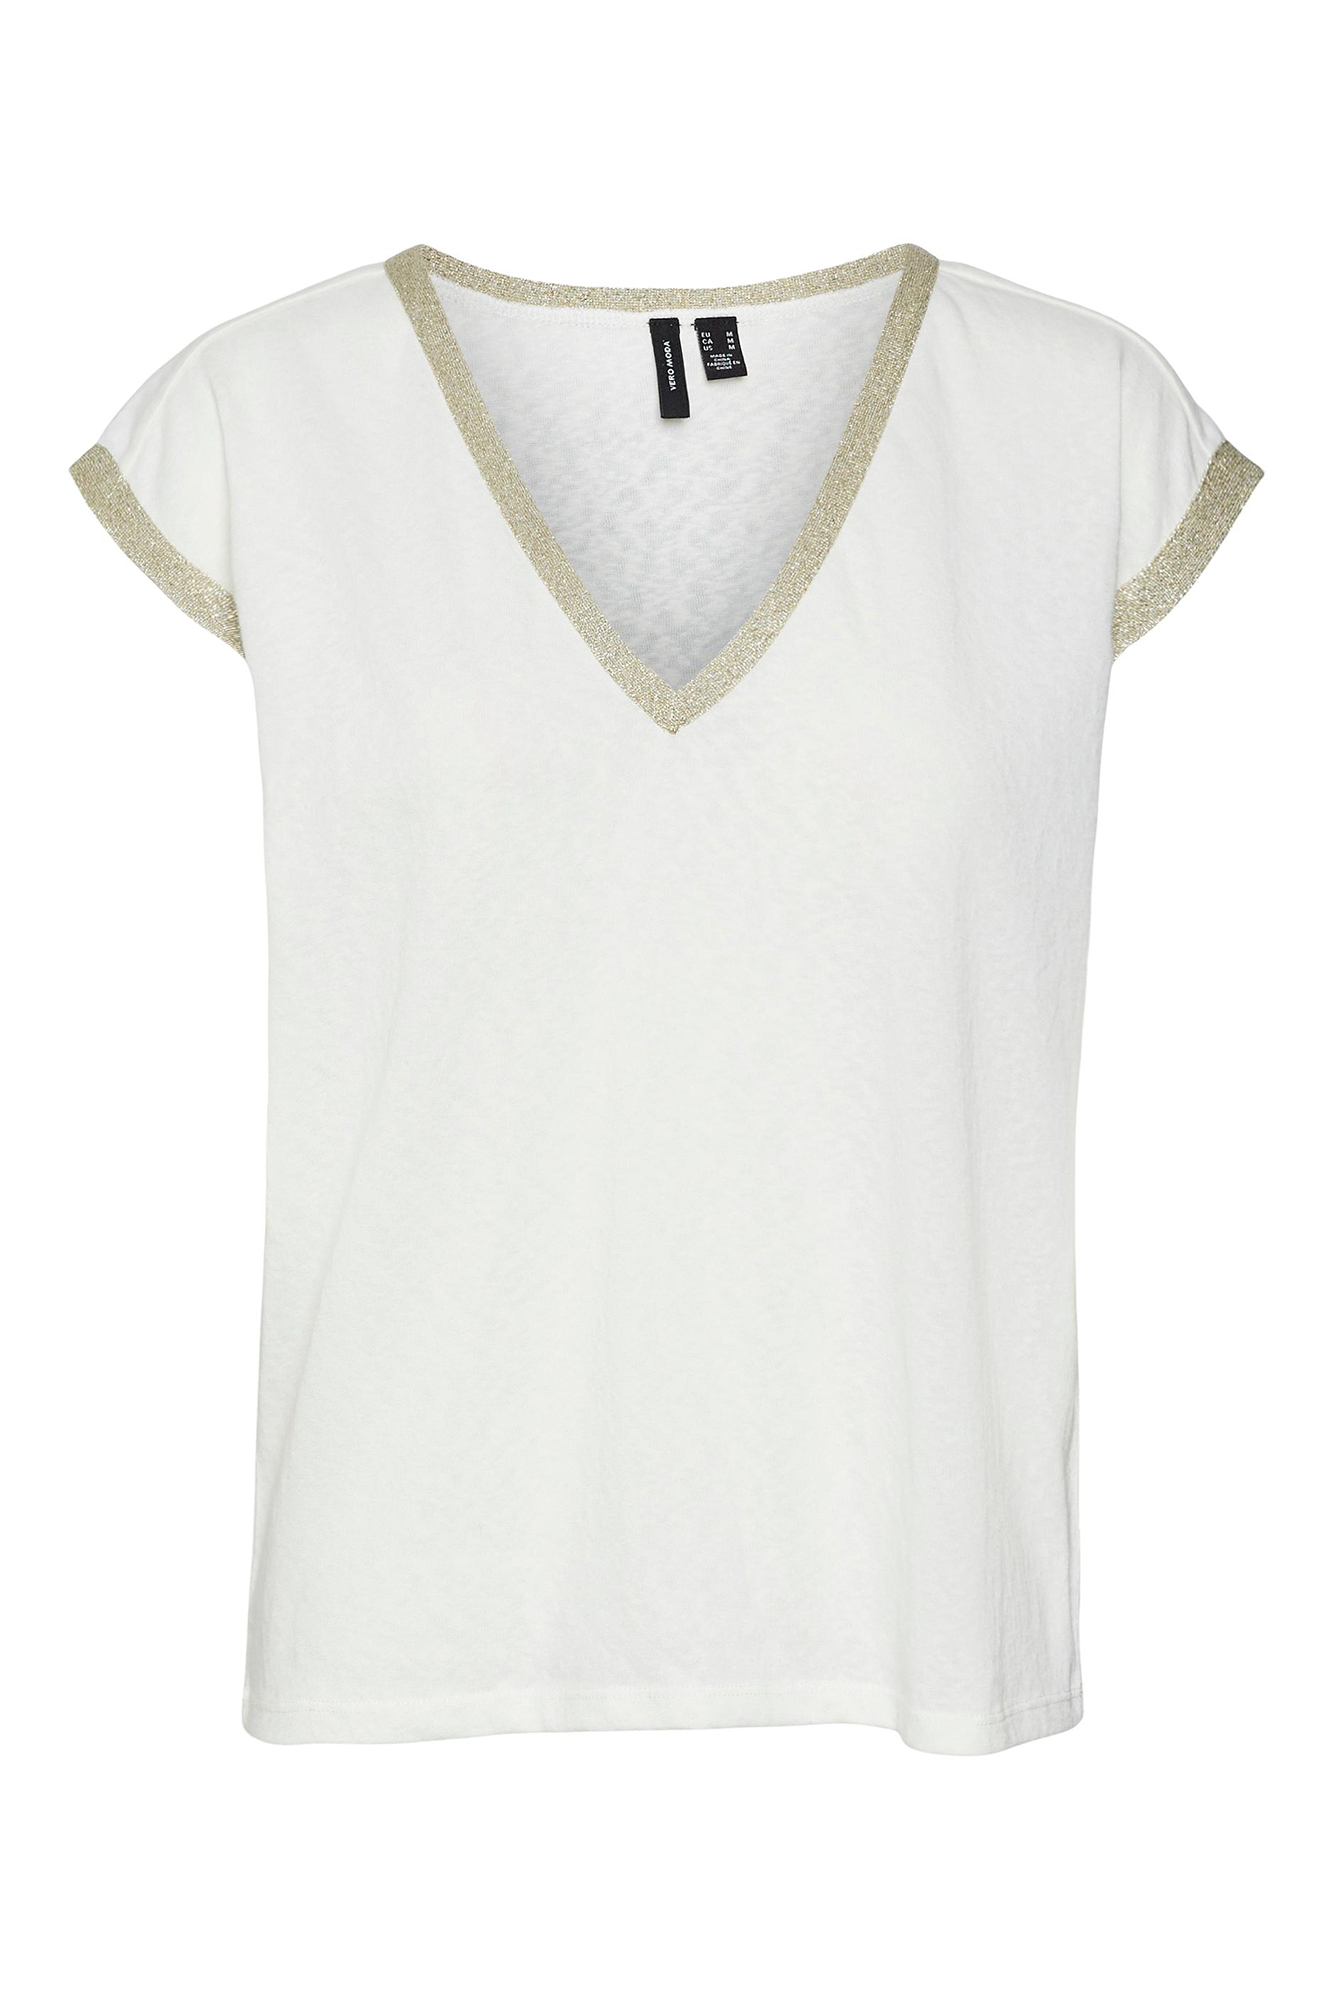  Camiseta PUMA Off Set, Camiseta de manga corta., XL, Blanco ( PUMA WHITE) : Ropa, Zapatos y Joyería